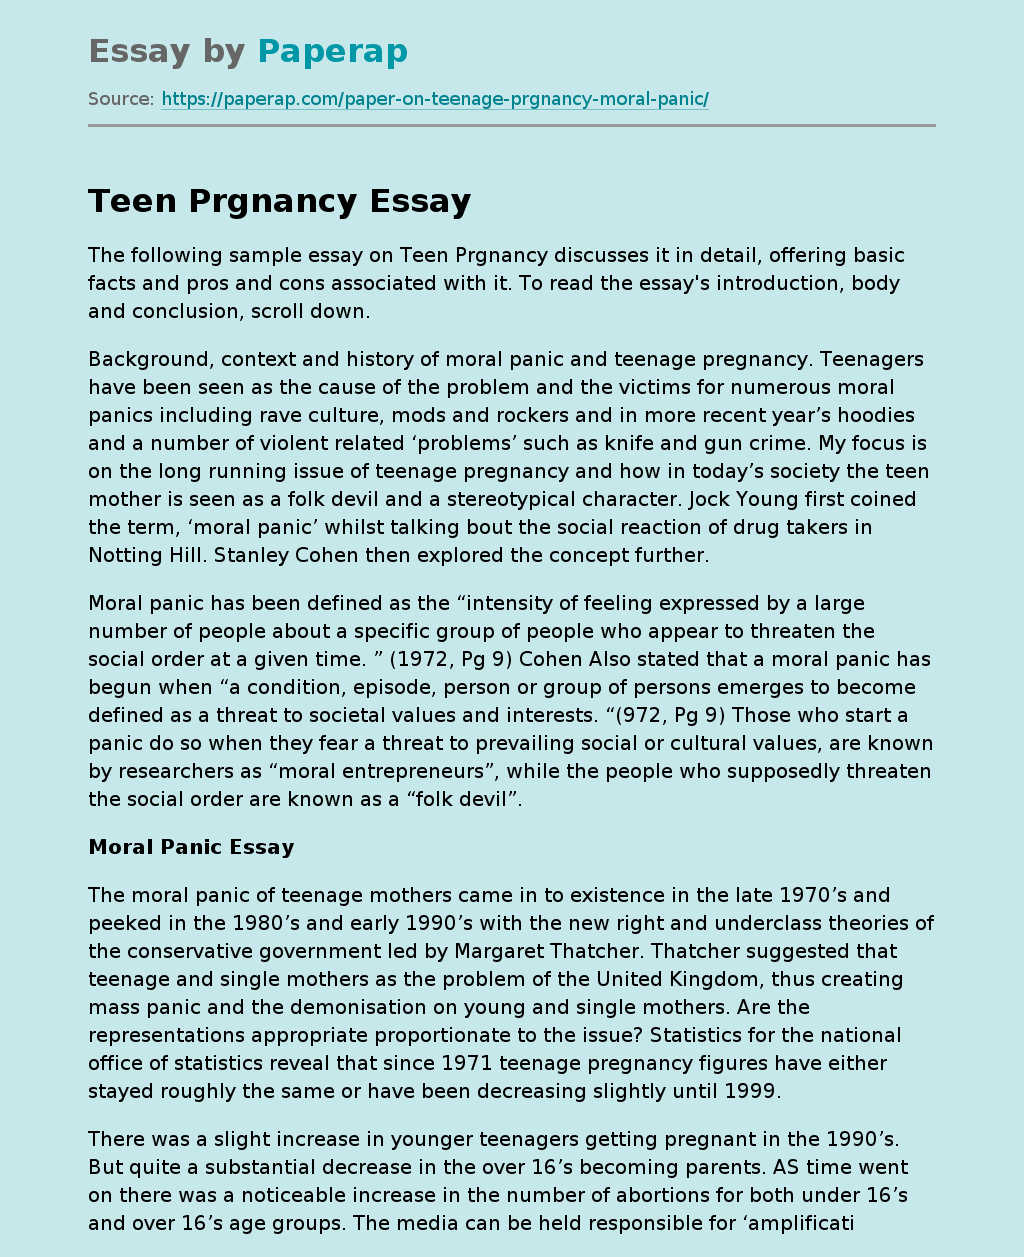 Moral Panic Over Teenage Pregnancy